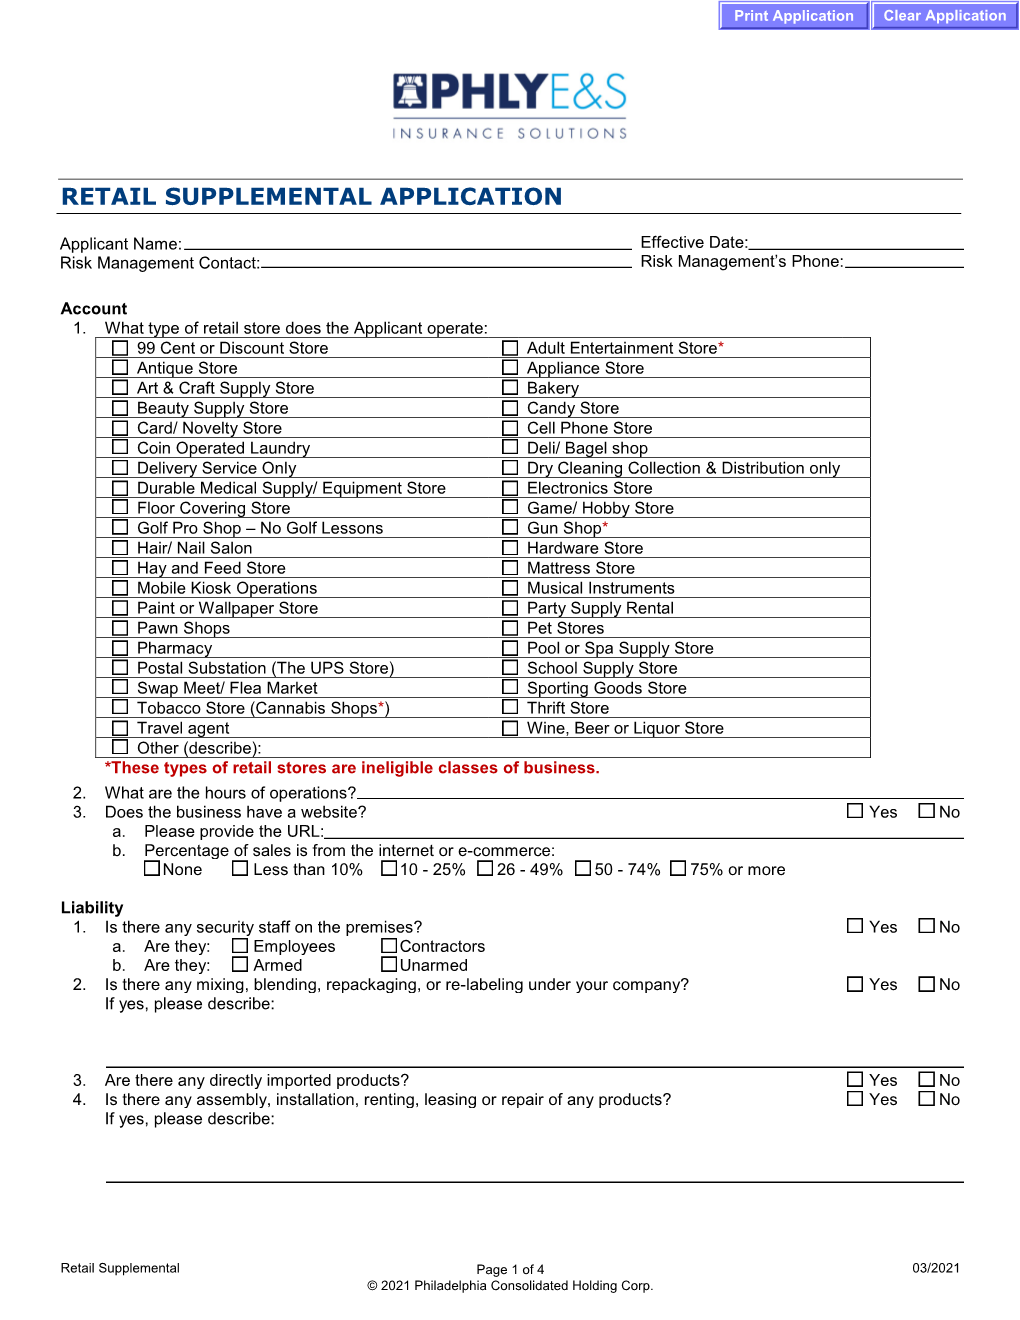 Retail Supplemental Application